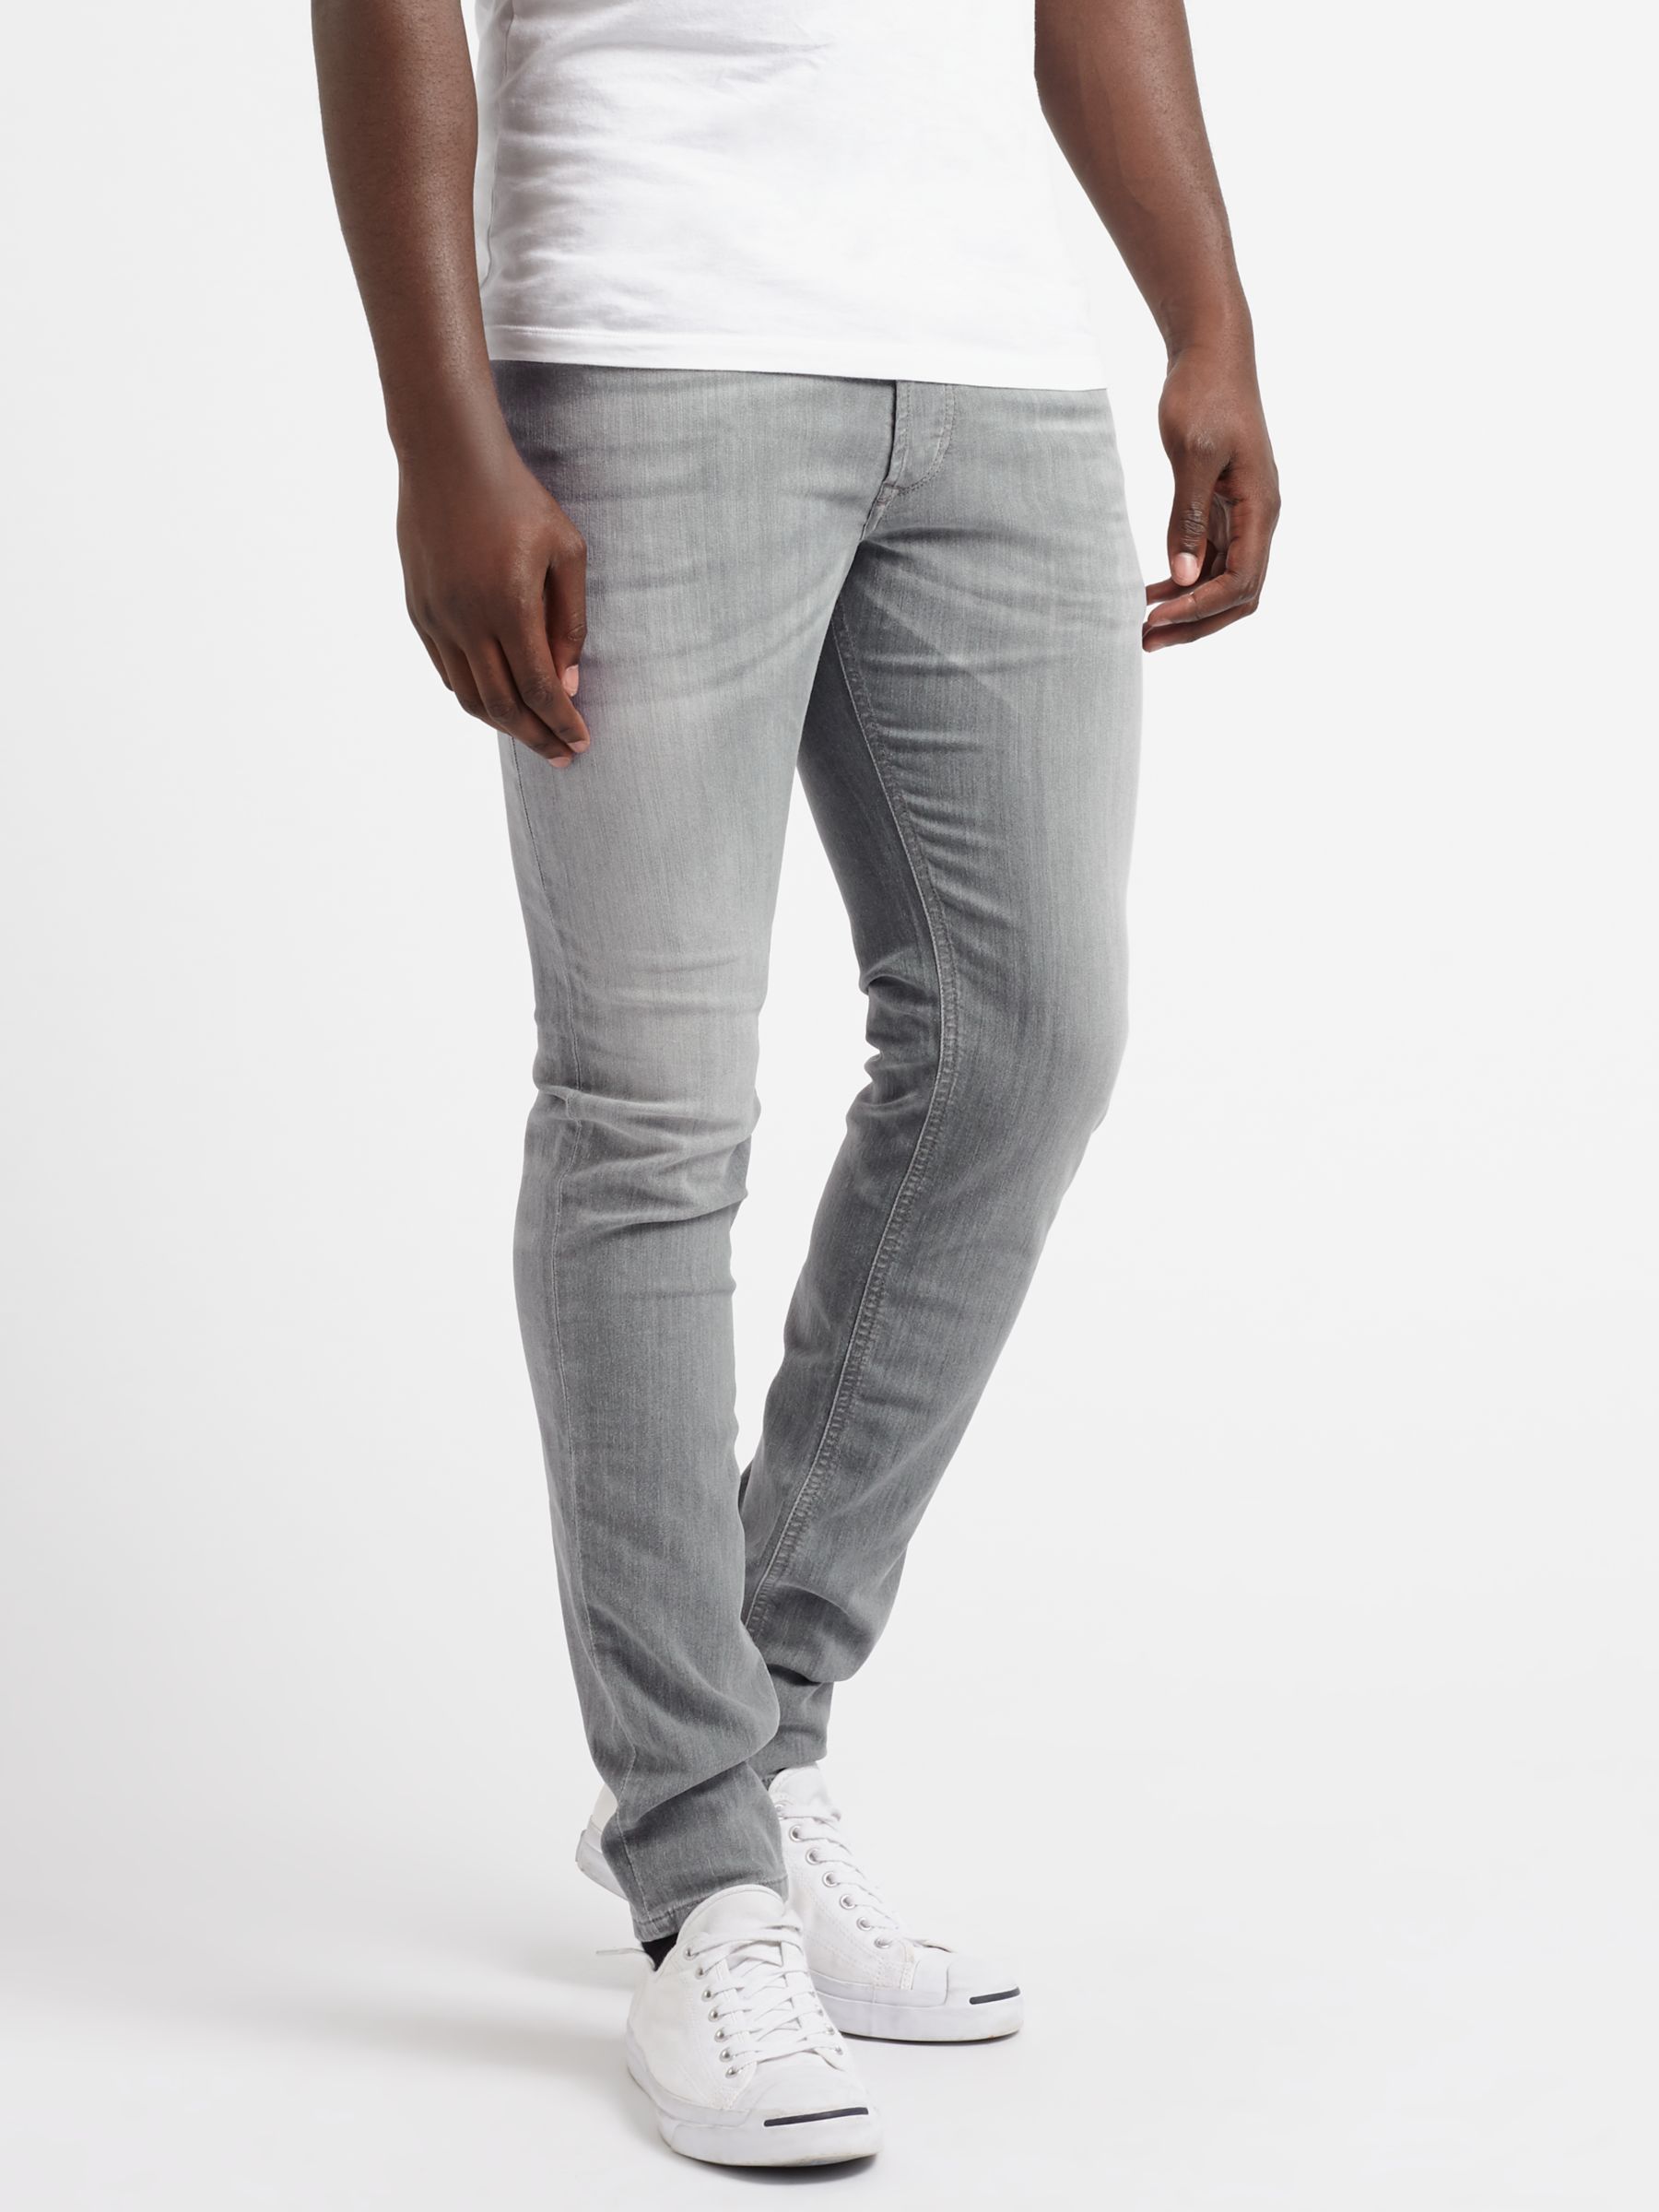 pale grey skinny jeans